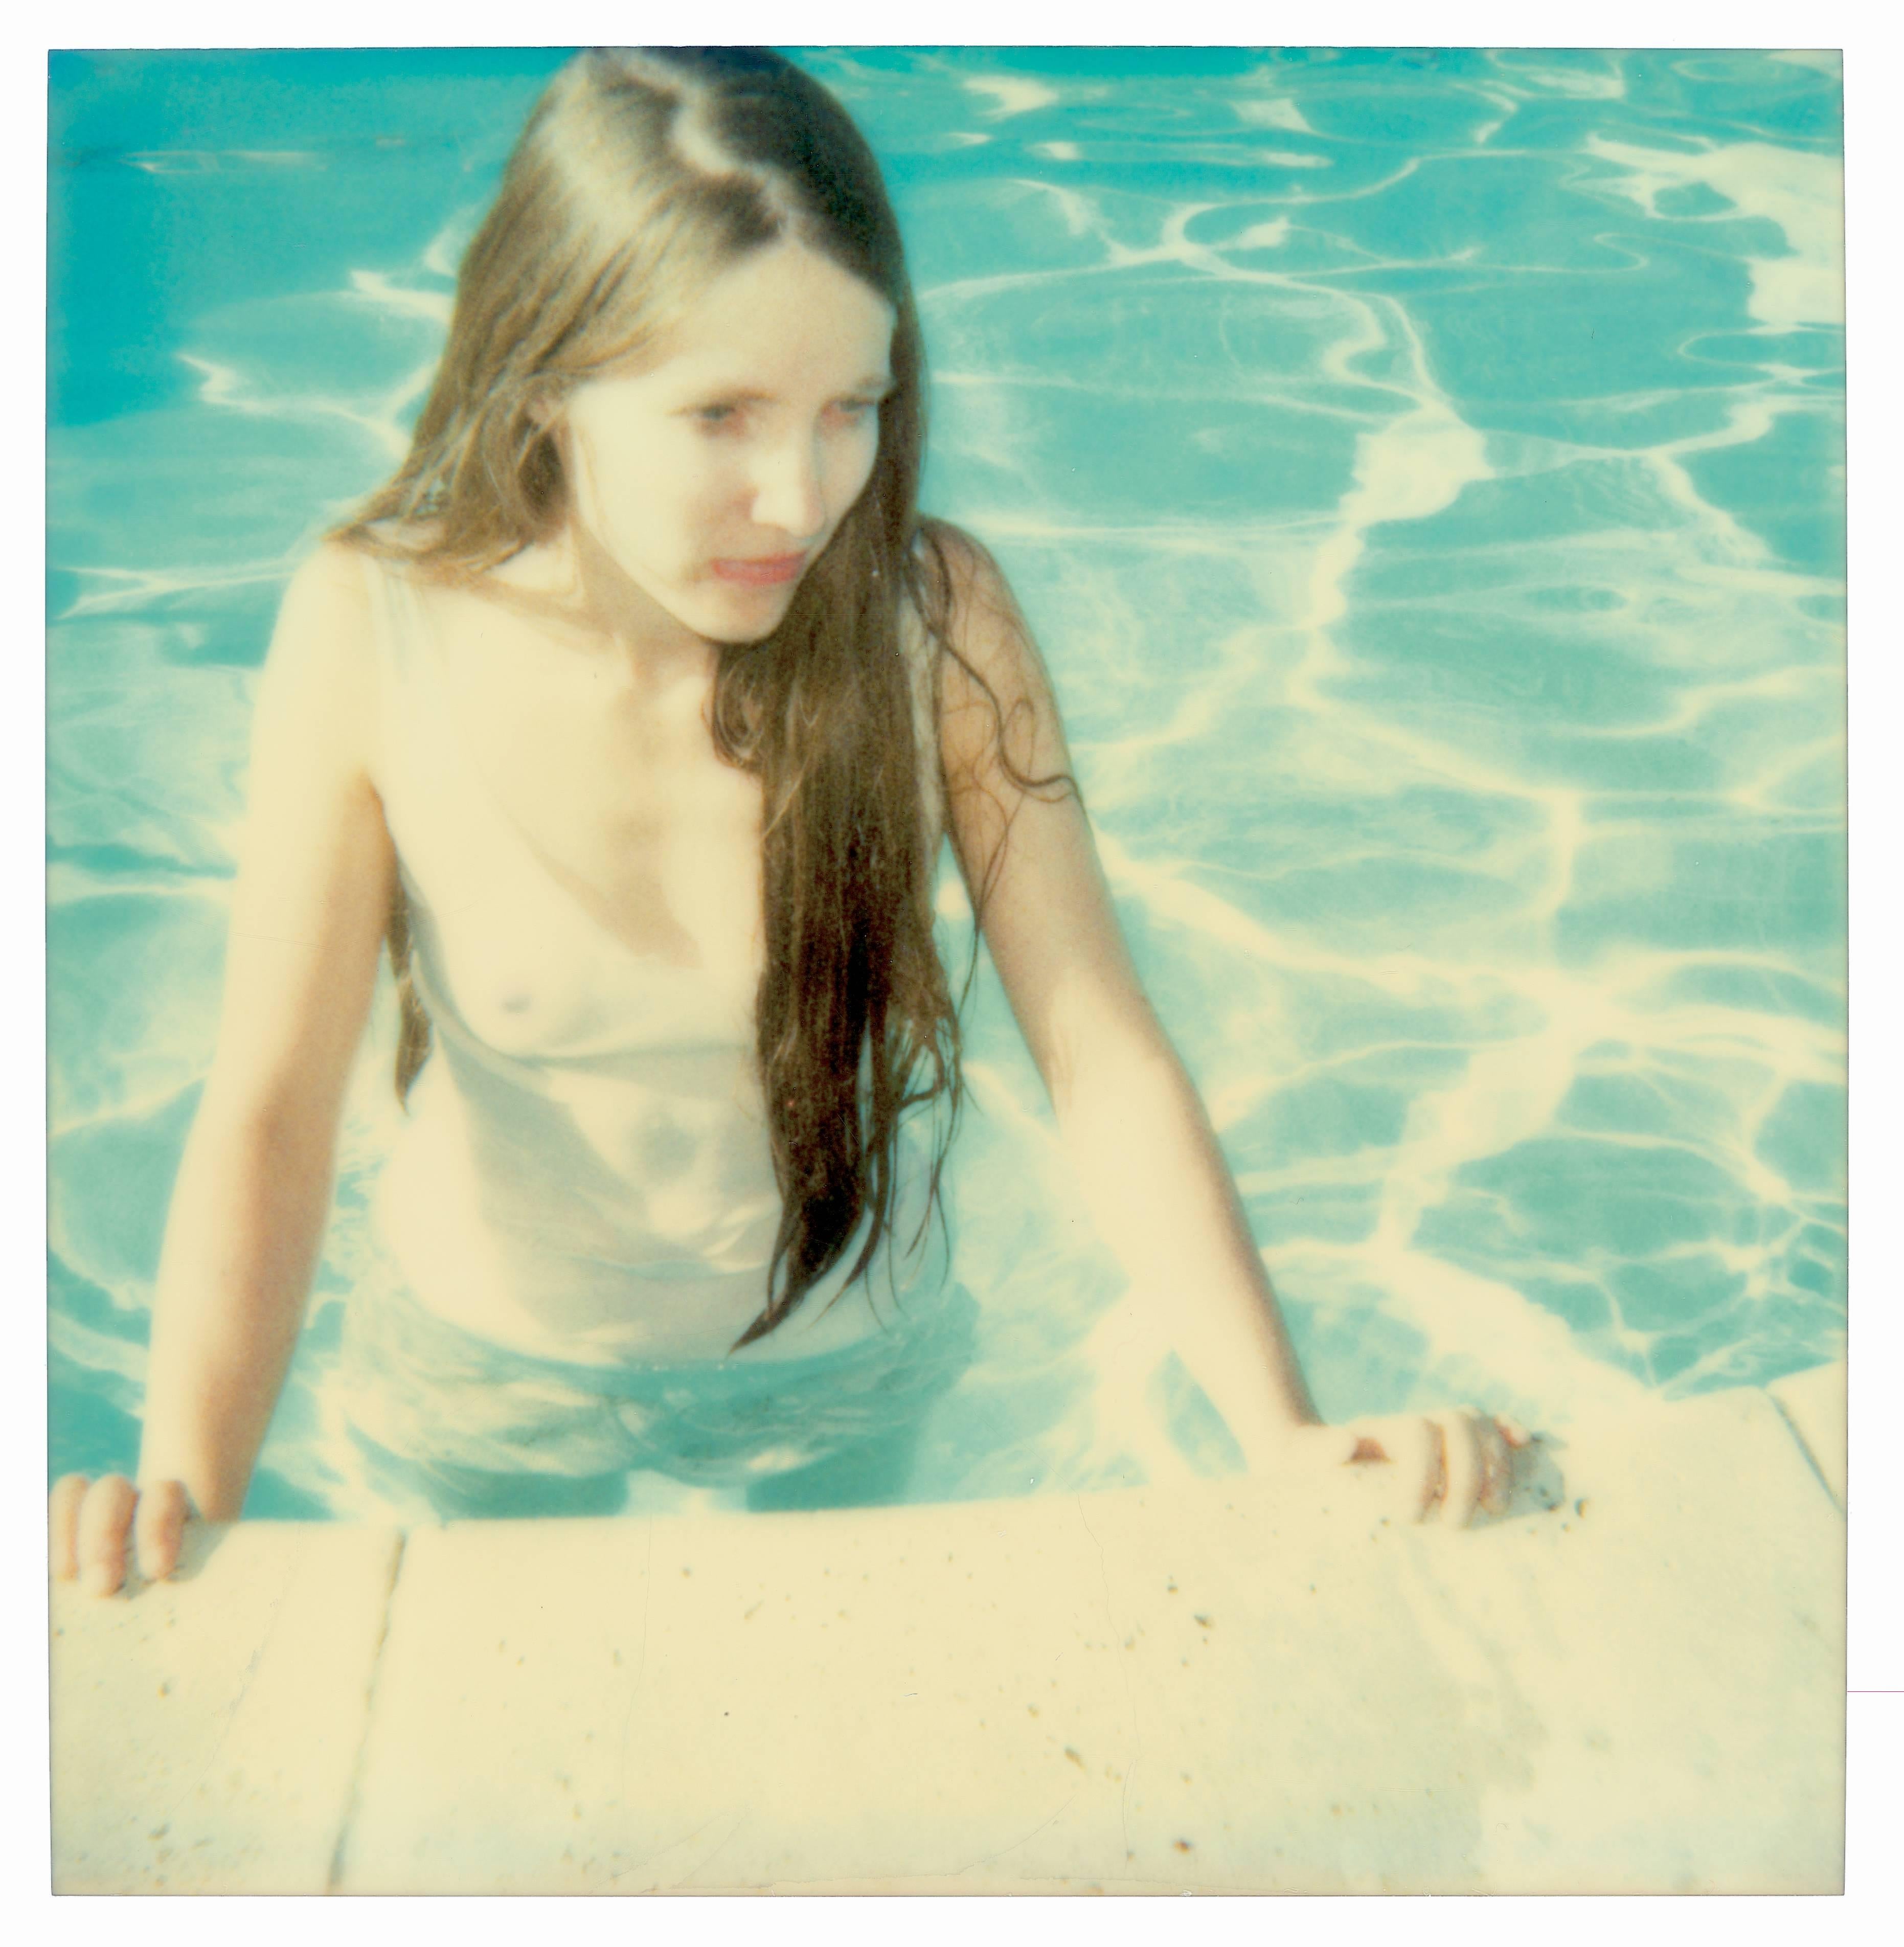 Pool Side - not mounted - 21st Century, Polaroid, Figurative Photograph, Woman